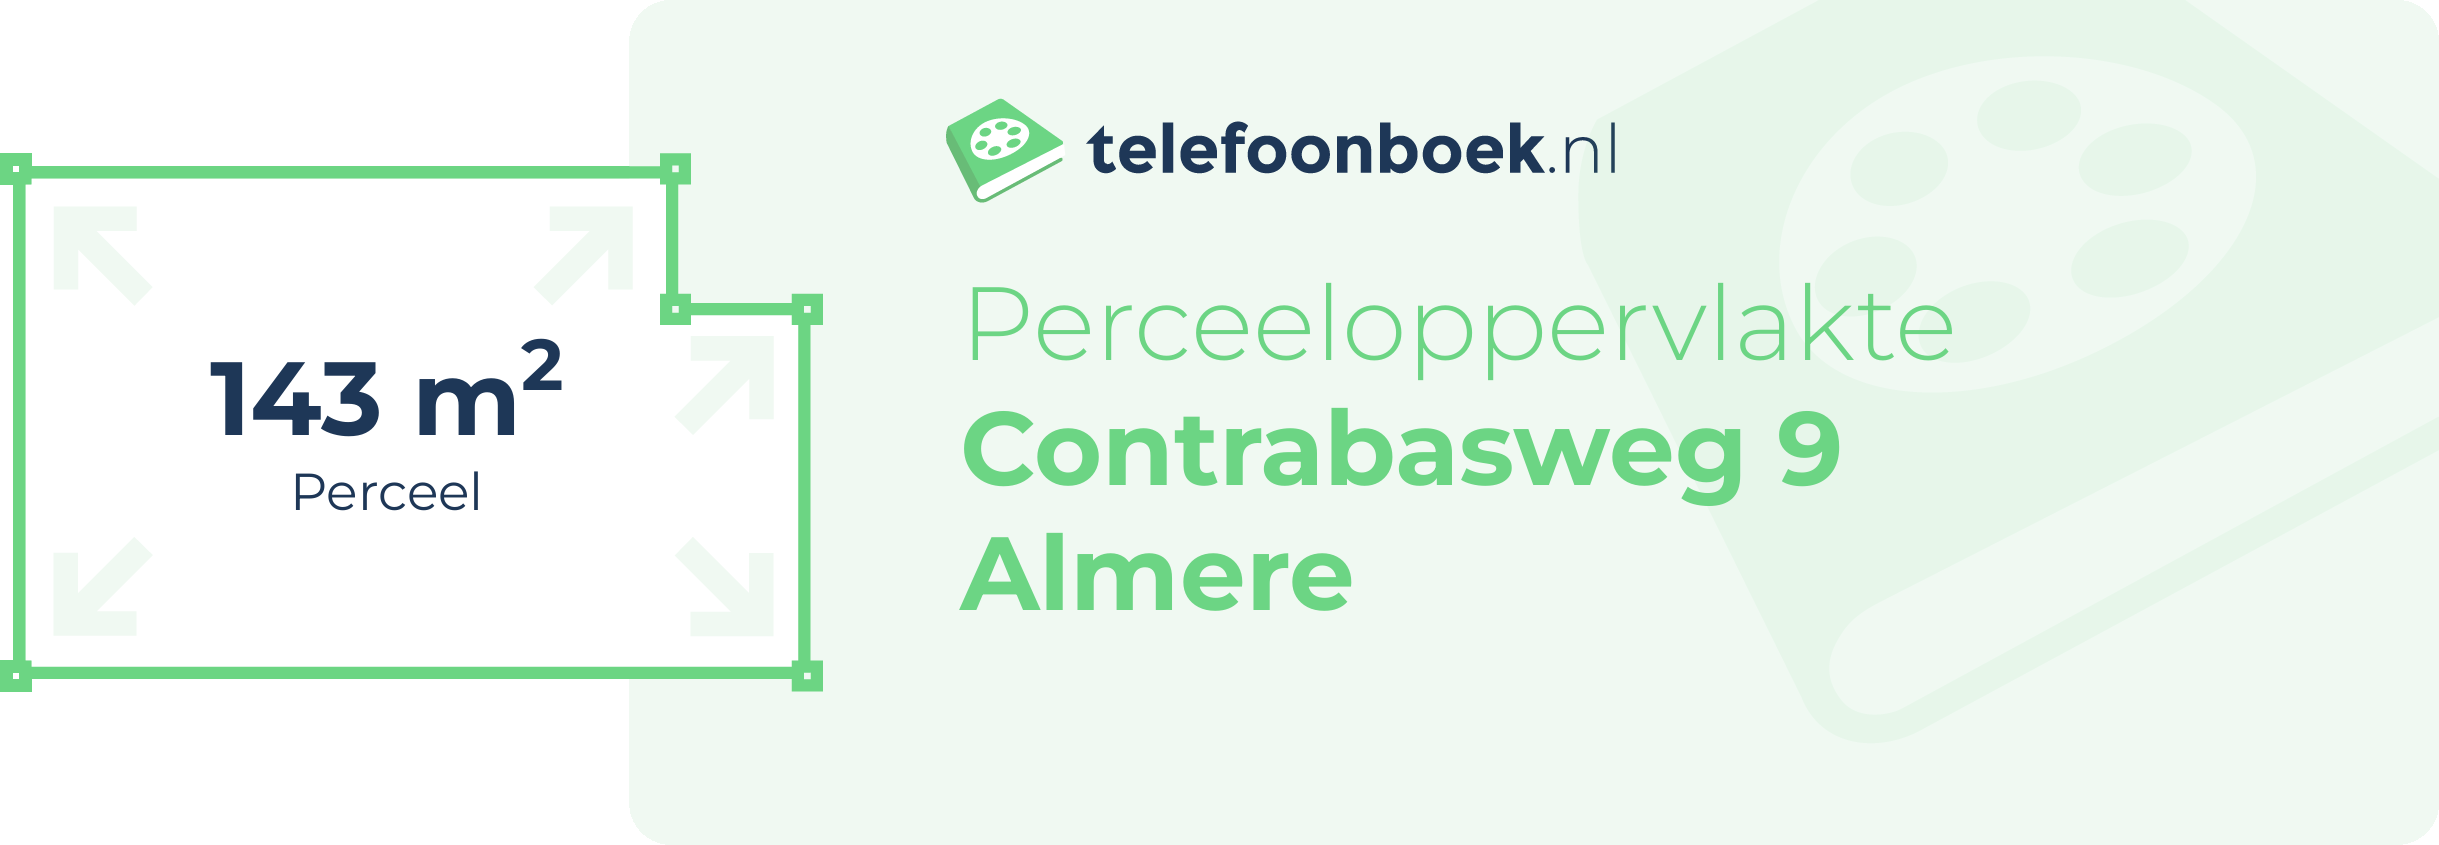 Perceeloppervlakte Contrabasweg 9 Almere